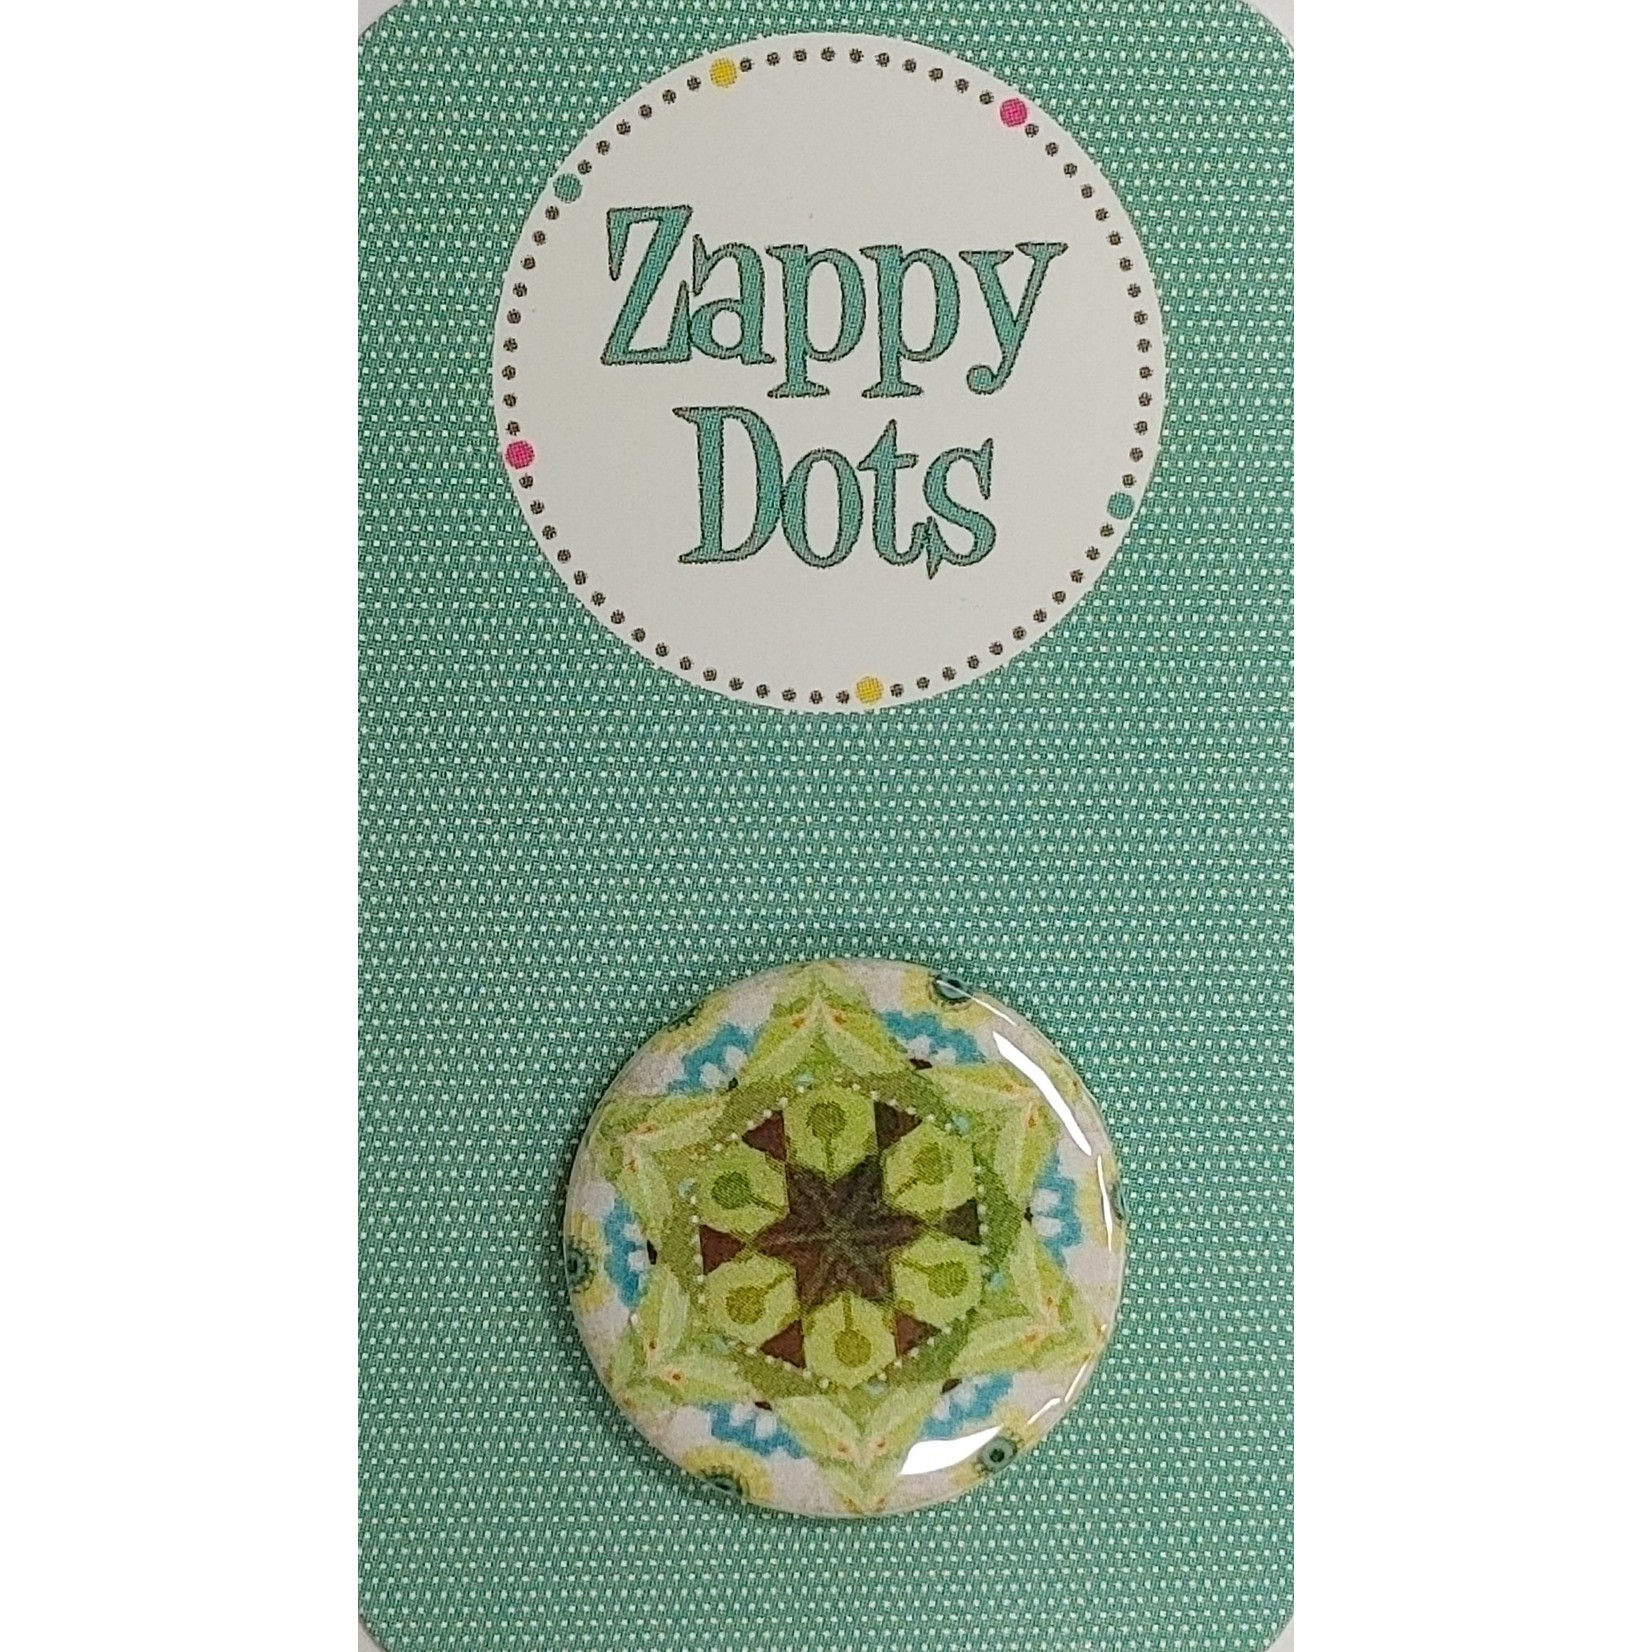 Zappy Dots Needle Nanny, Katja Marek New Hexagon Millefiore Dot 4